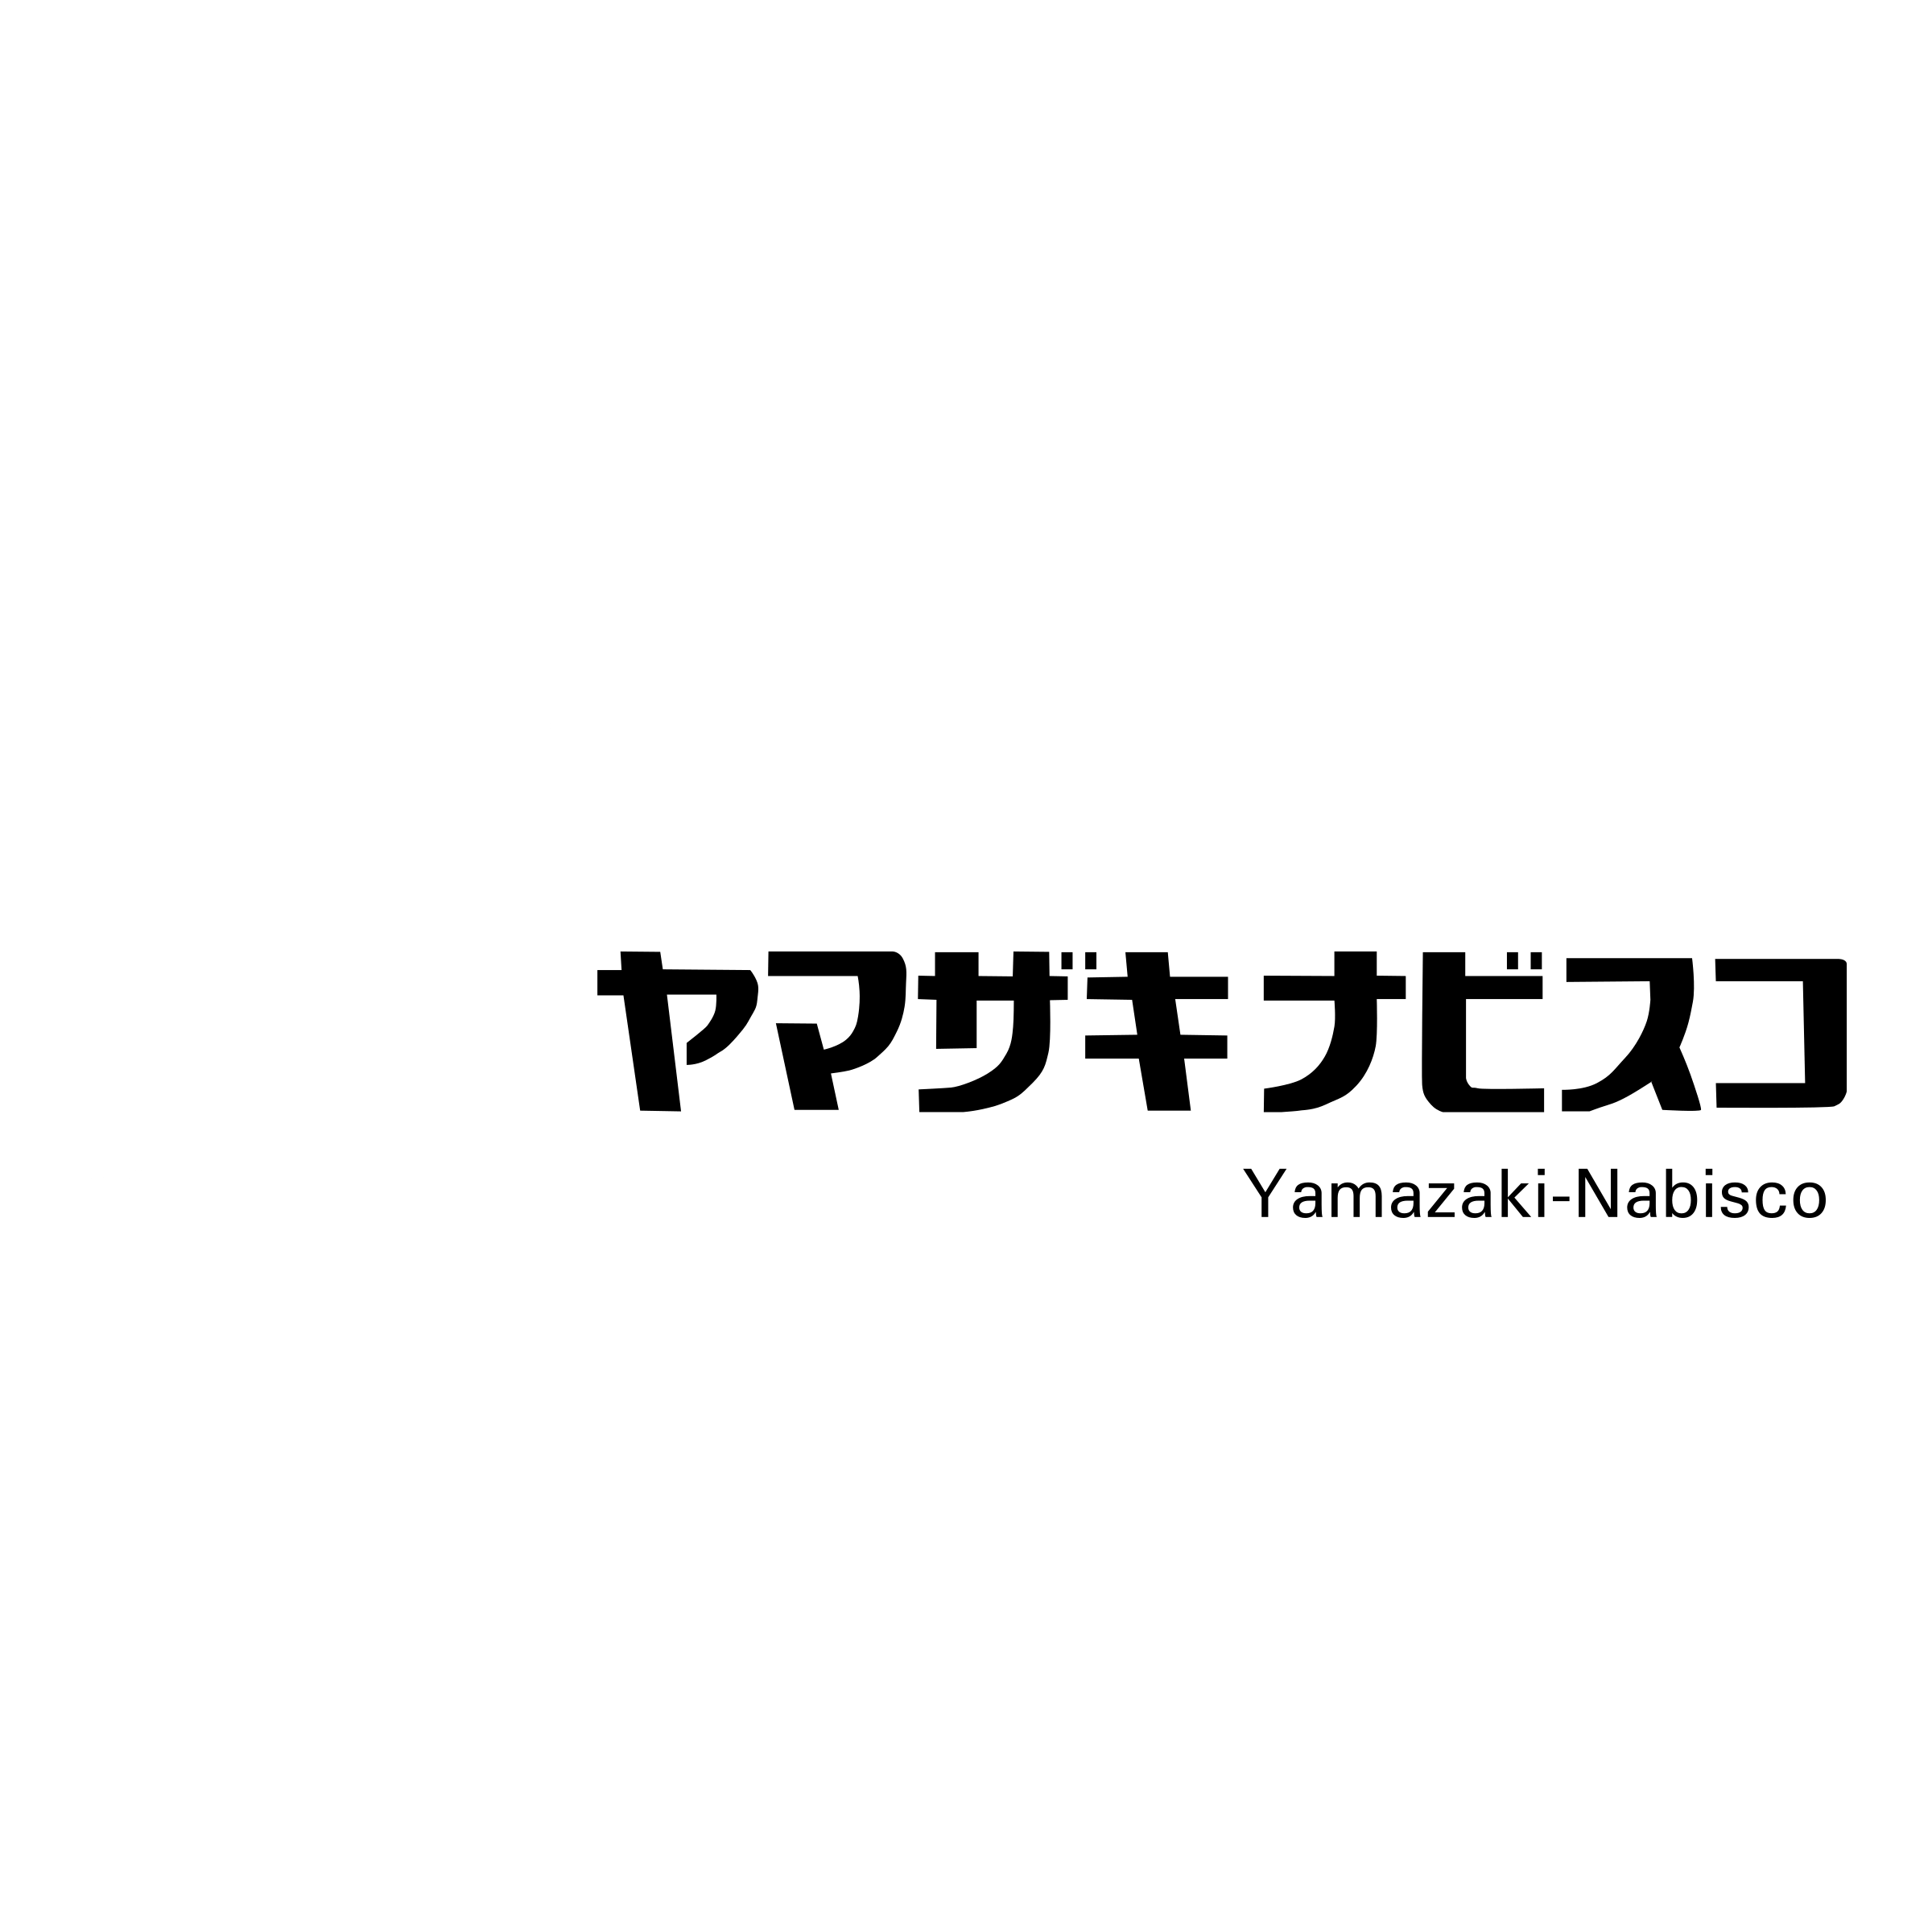 Nabisco Logo - Yamazaki Nabisco Logo PNG Transparent & SVG Vector - Freebie Supply